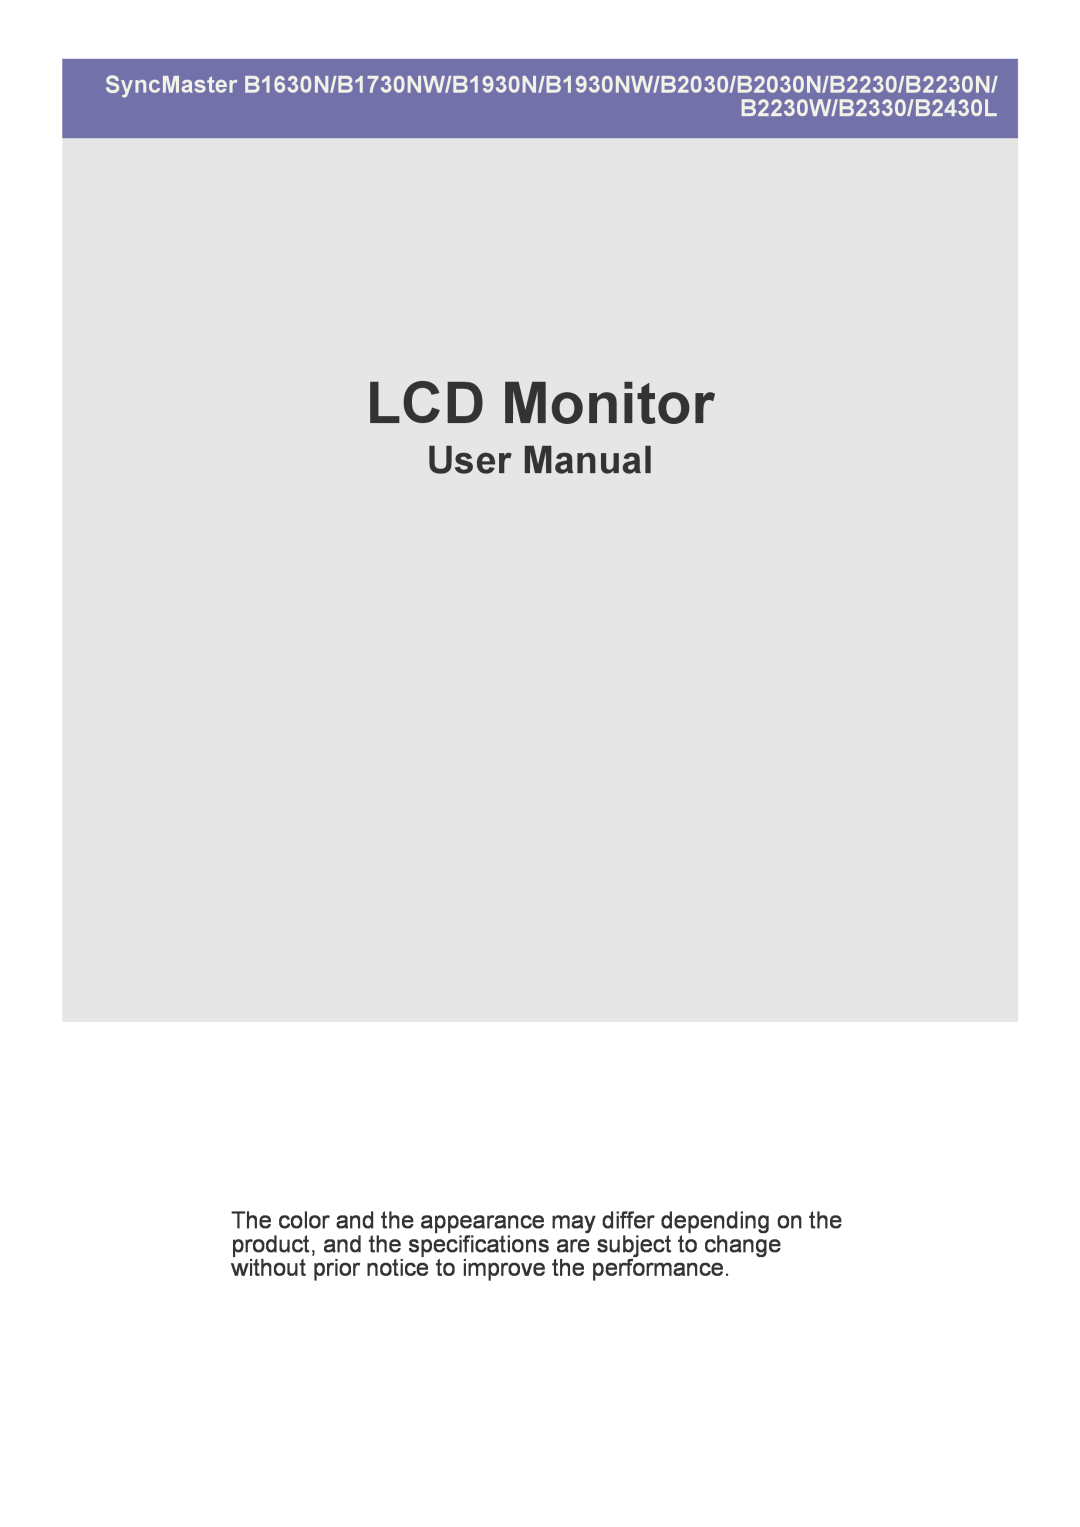 Samsung B2430L, B2330, B1930NW, B1730NW, B1630N, B2230W, B2230N, B2030N user manual LCD Monitor, User Manual 